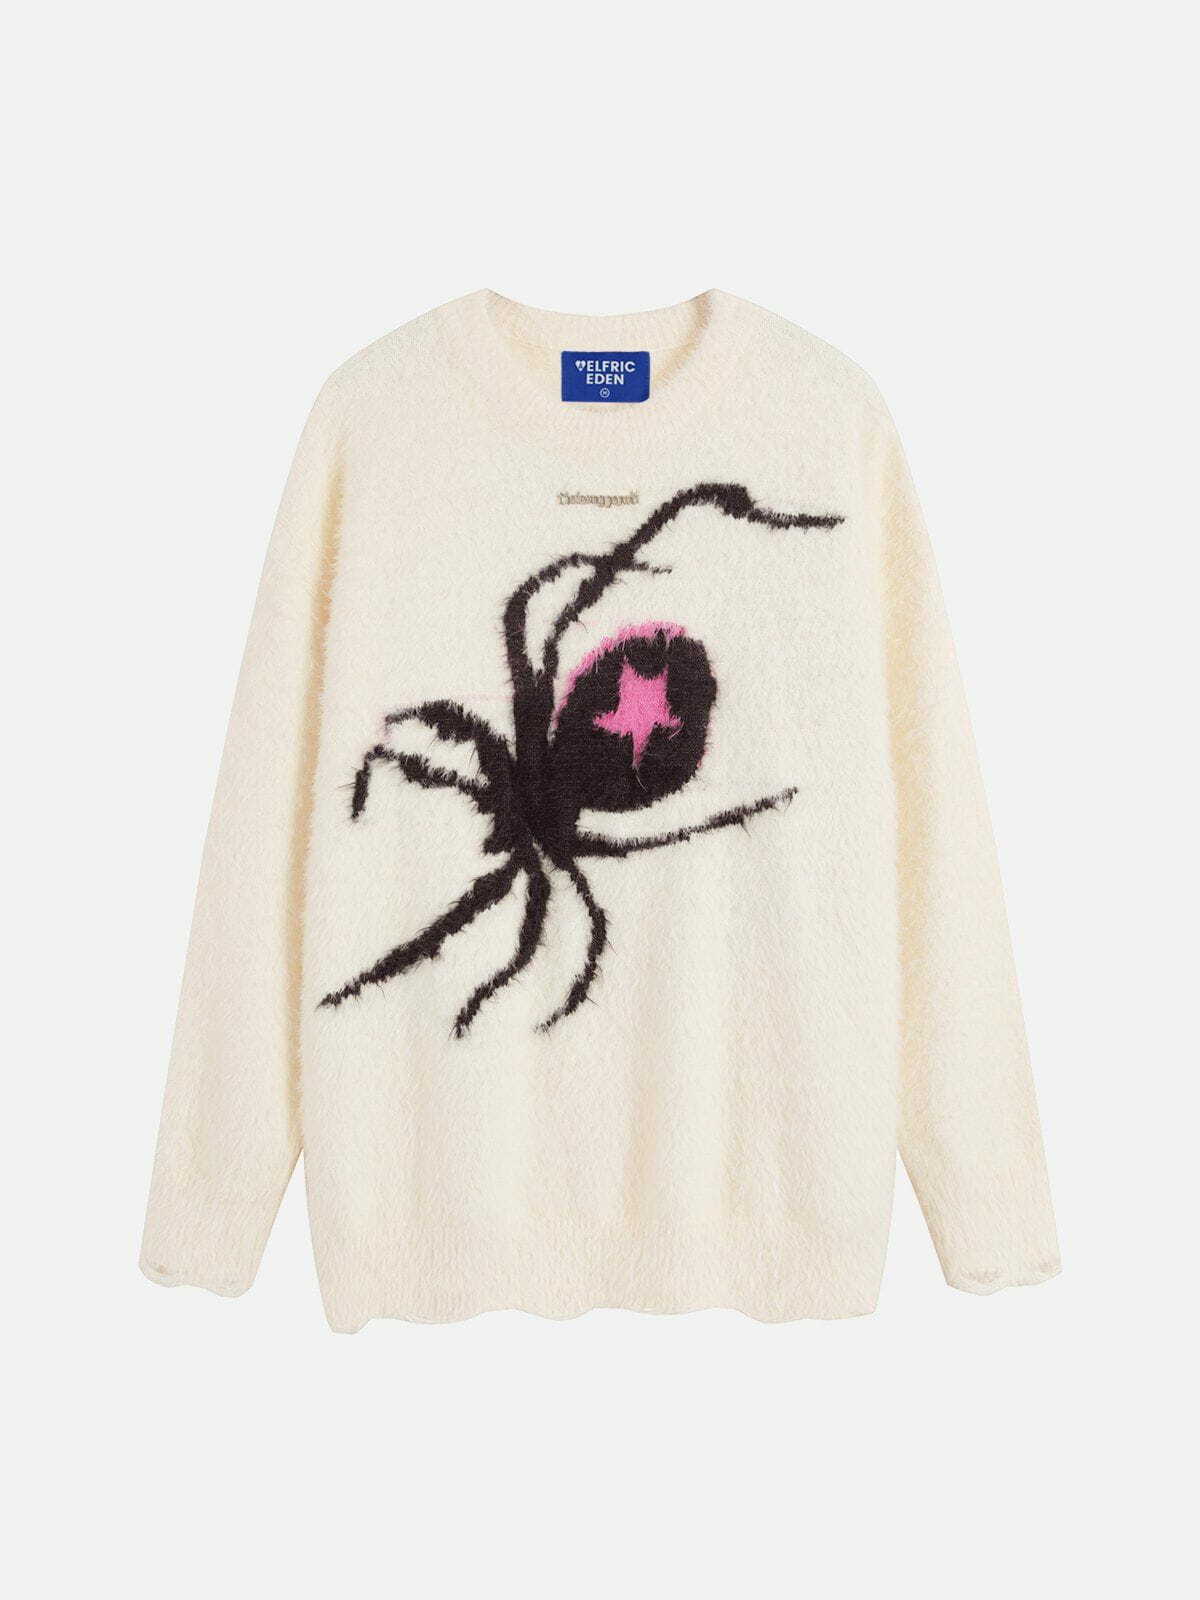 retro star spider sweater edgy & vibrant streetwear 8701